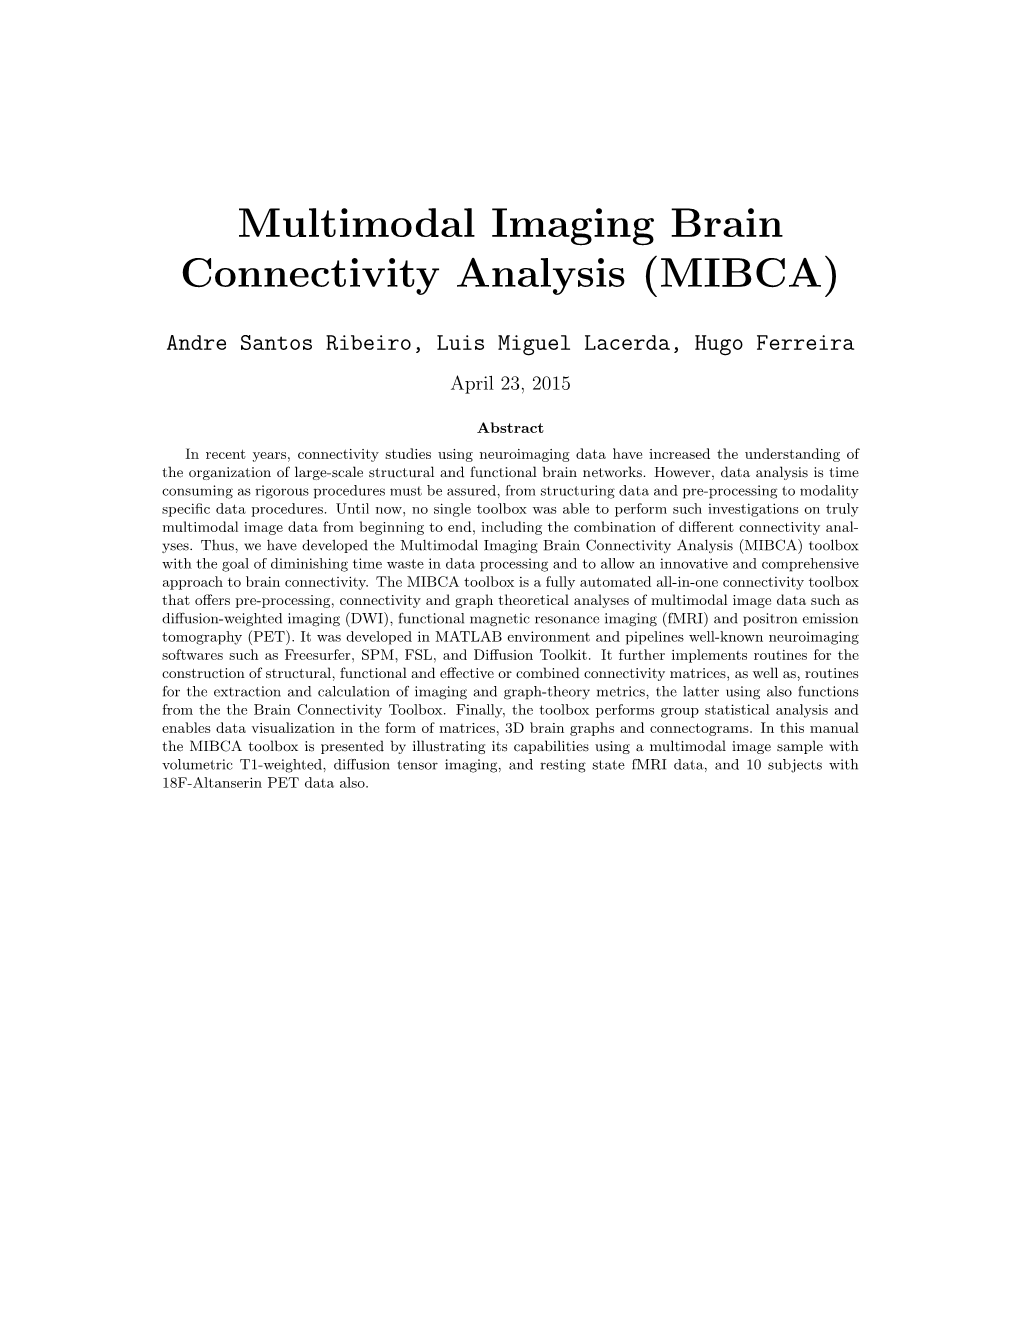 Multimodal Imaging Brain Connectivity Analysis (MIBCA)